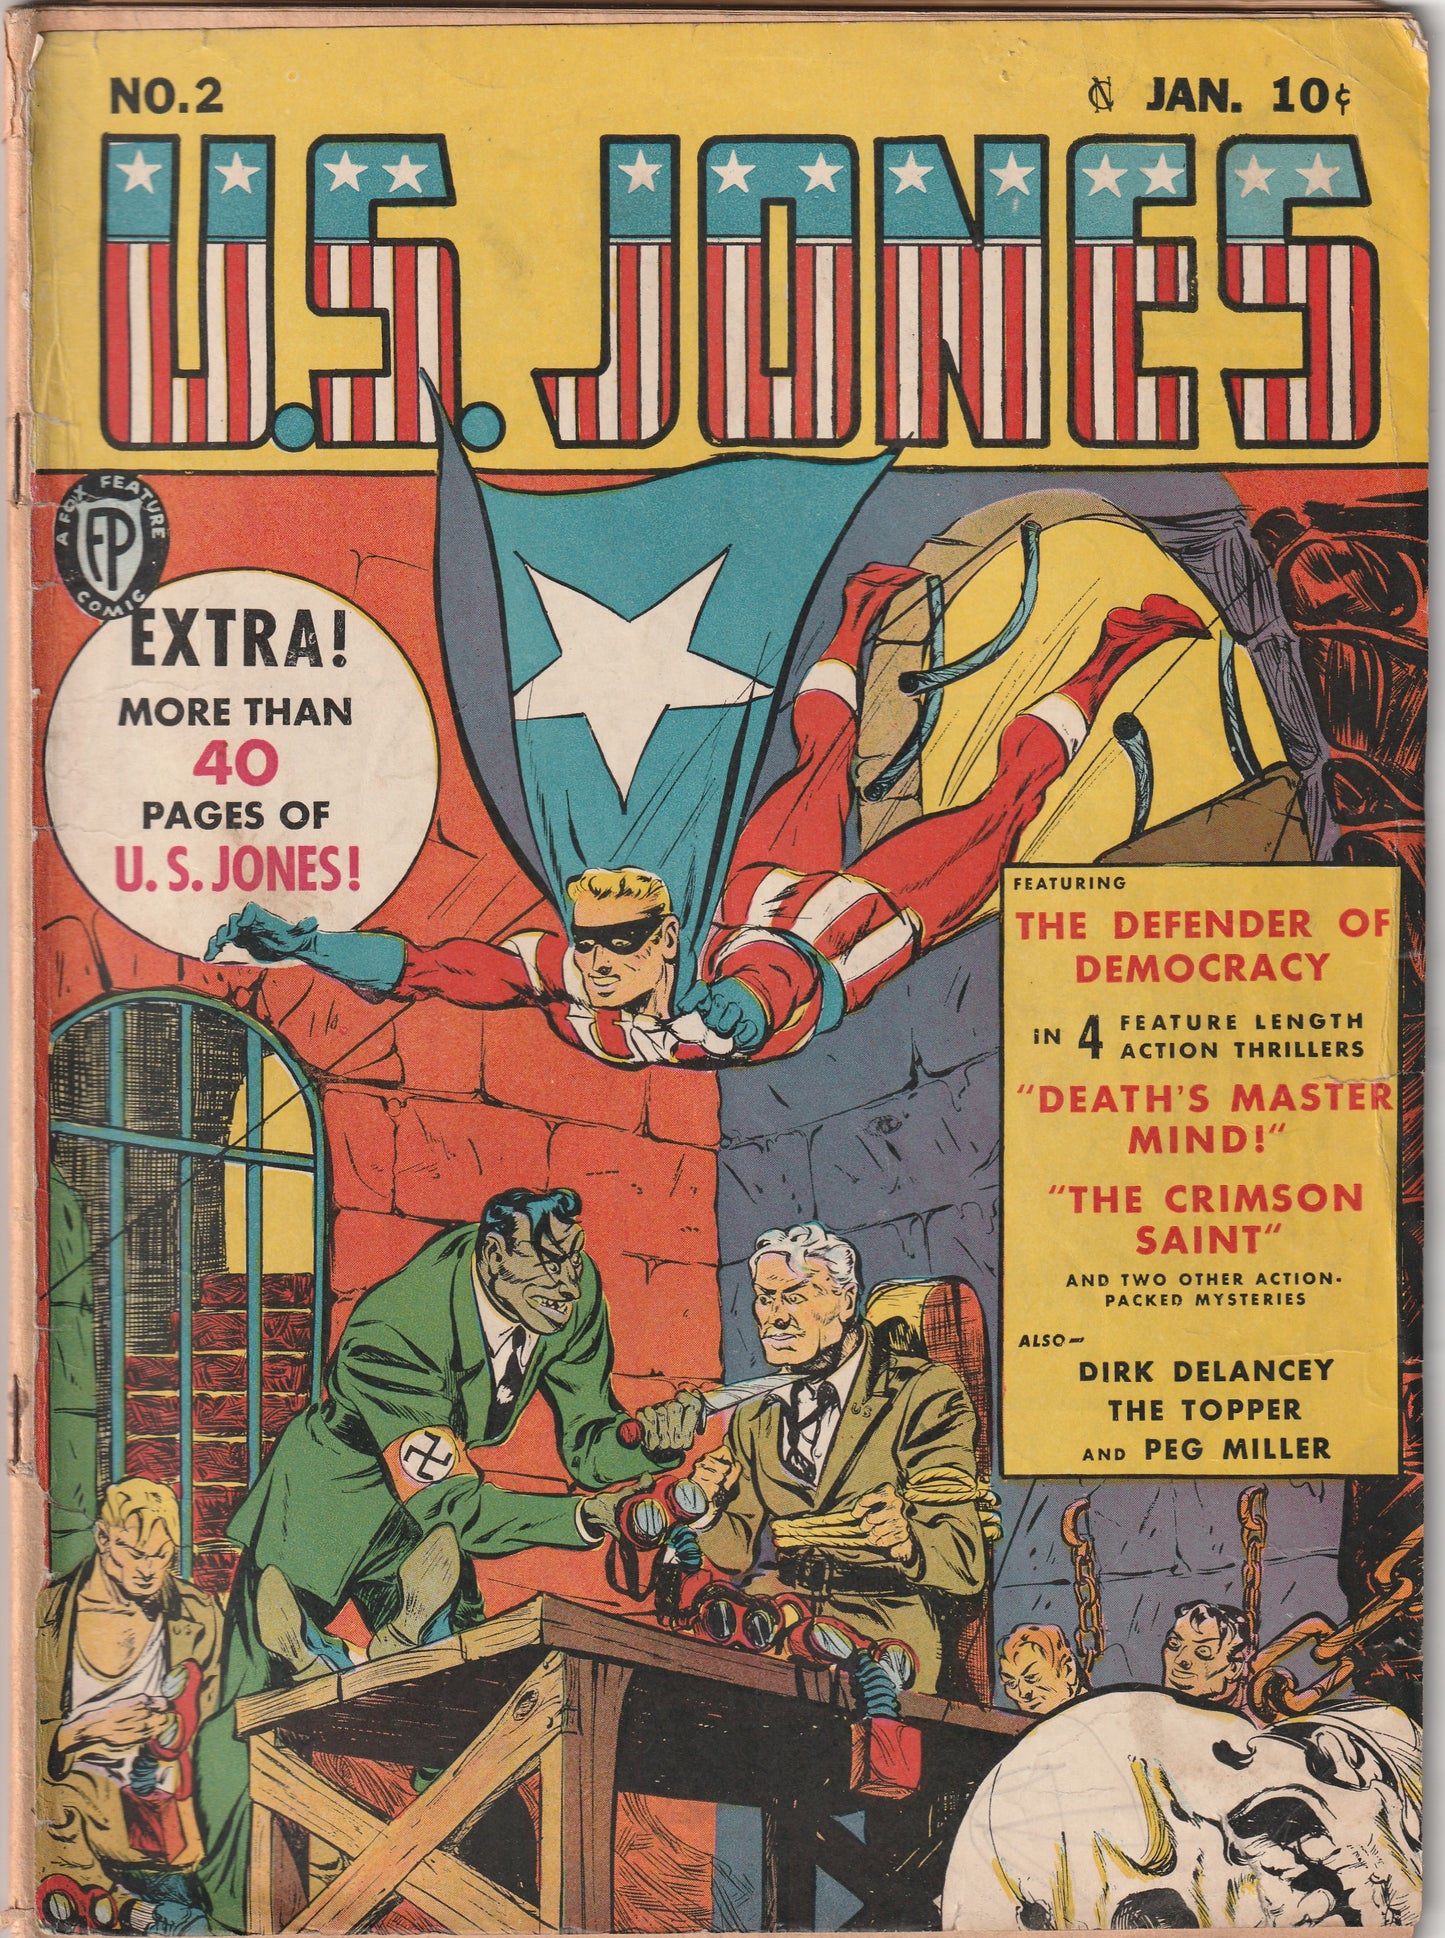 U.S. Jones #2 (1942) - Classic Nazi cover